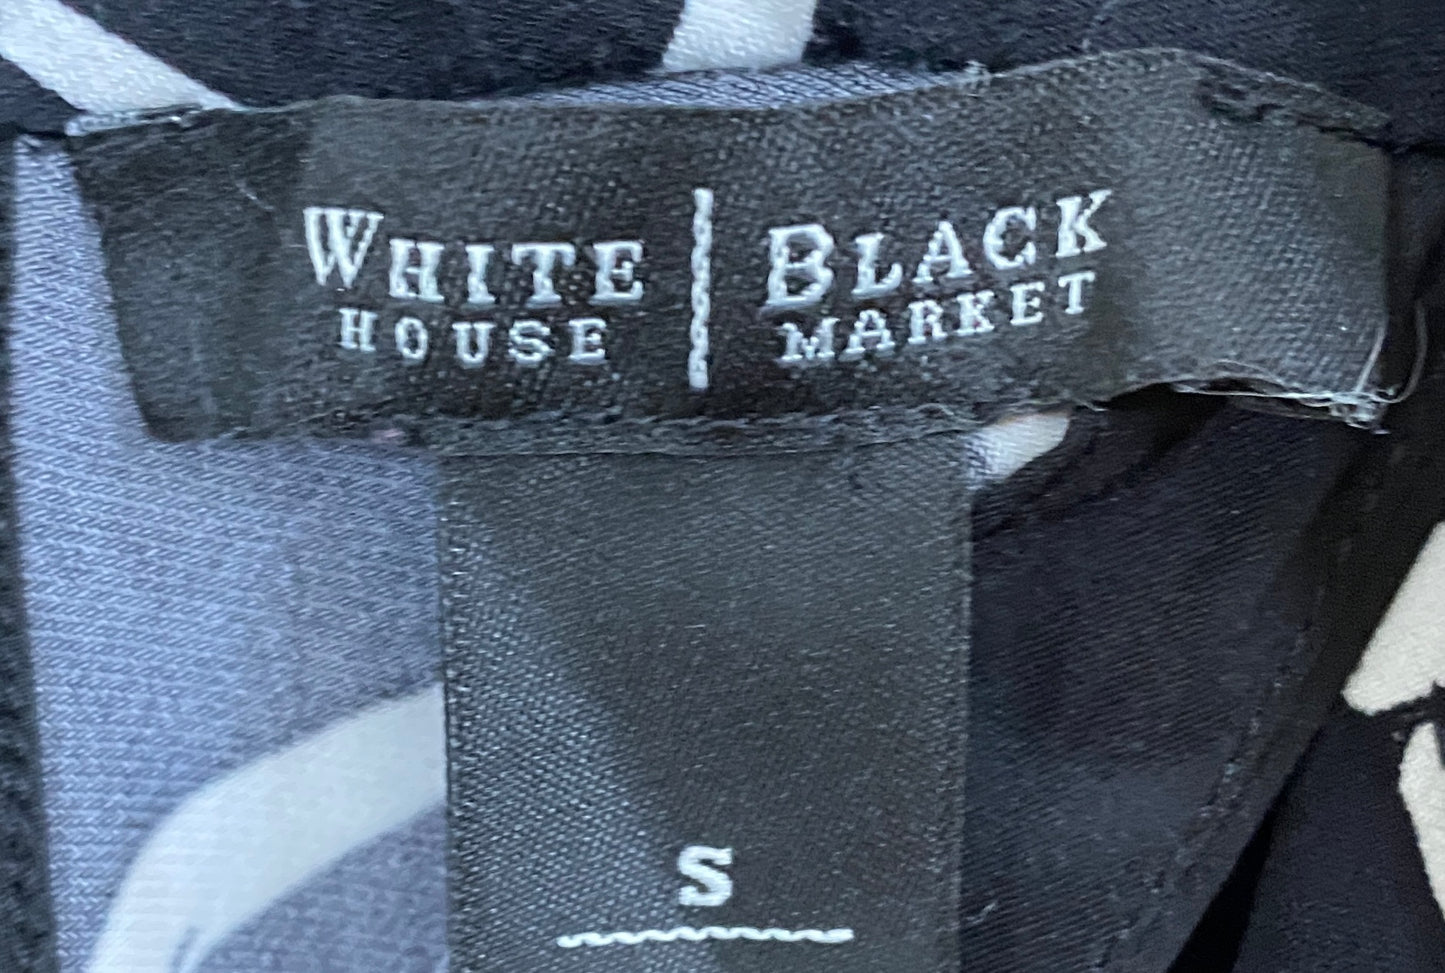 White House Black Market Top Sleeveless Black White Size S SKU 000314-21